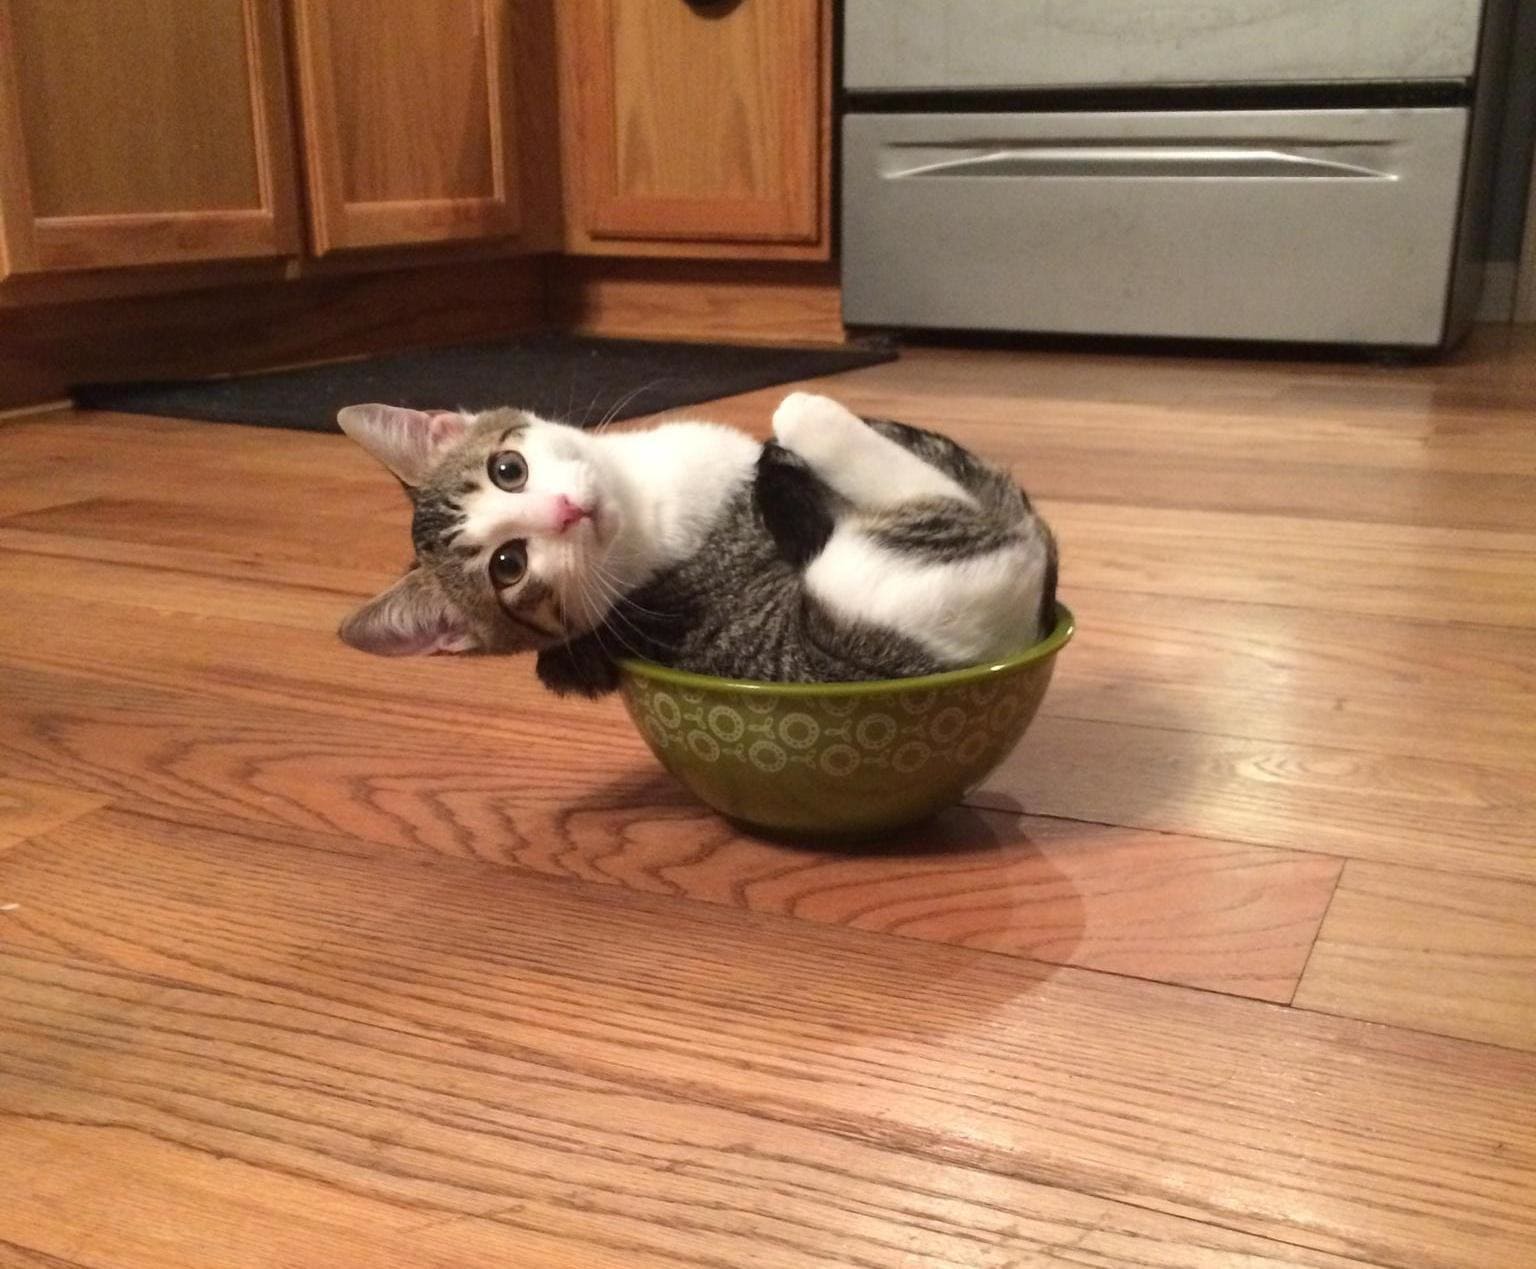 kitten in small bowl if i fits i sits, kitten reclining in small bowl if i fit i sit, if i fits i sits, if i fit i sit, if it fits i sits, if i fits i sits cat, if i fit i sit cat, if it fits i sits cats, cats if i fits i sits, cat meme if it fits i sits, cat if i fits i sits, cat if it fits i sits, if i fit i sit picture, if i fits i sits picture, if i fits i sits pictures, if i fit i sit pictures, if i fits i sits image, if i fits i sits images, if i fit i sit image, if i fit i sit images, cats fitting and sitting, cats if i fits i sits picture, cats if i fits i sits pictures, cats if i fits i sits image, cats if i fits i sits images